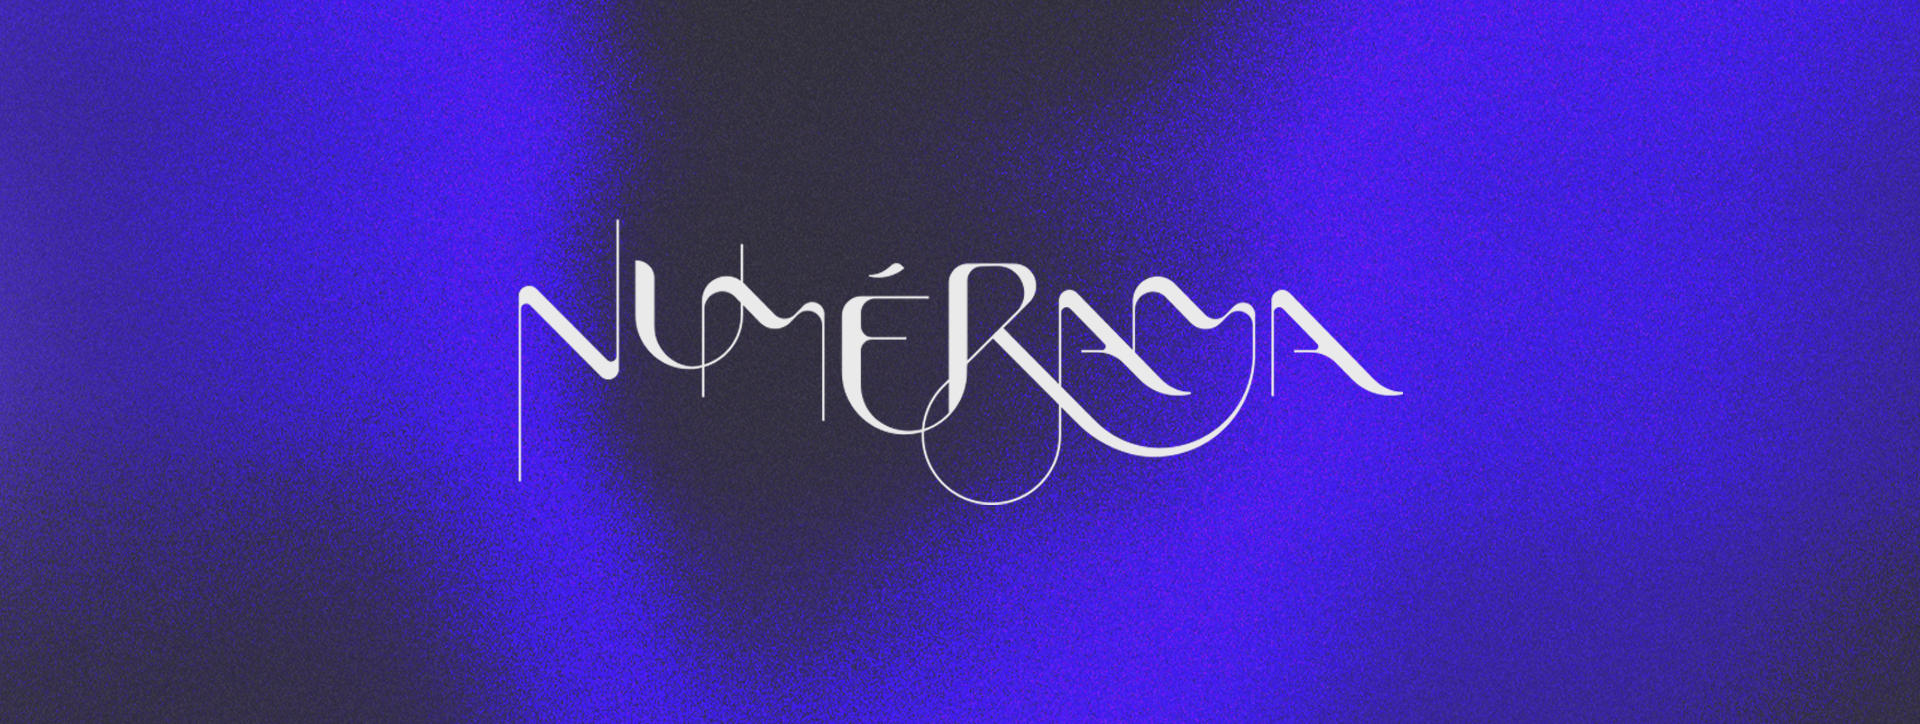 numerama-adrienducrocq-logo-texture-festival-branding-lille
